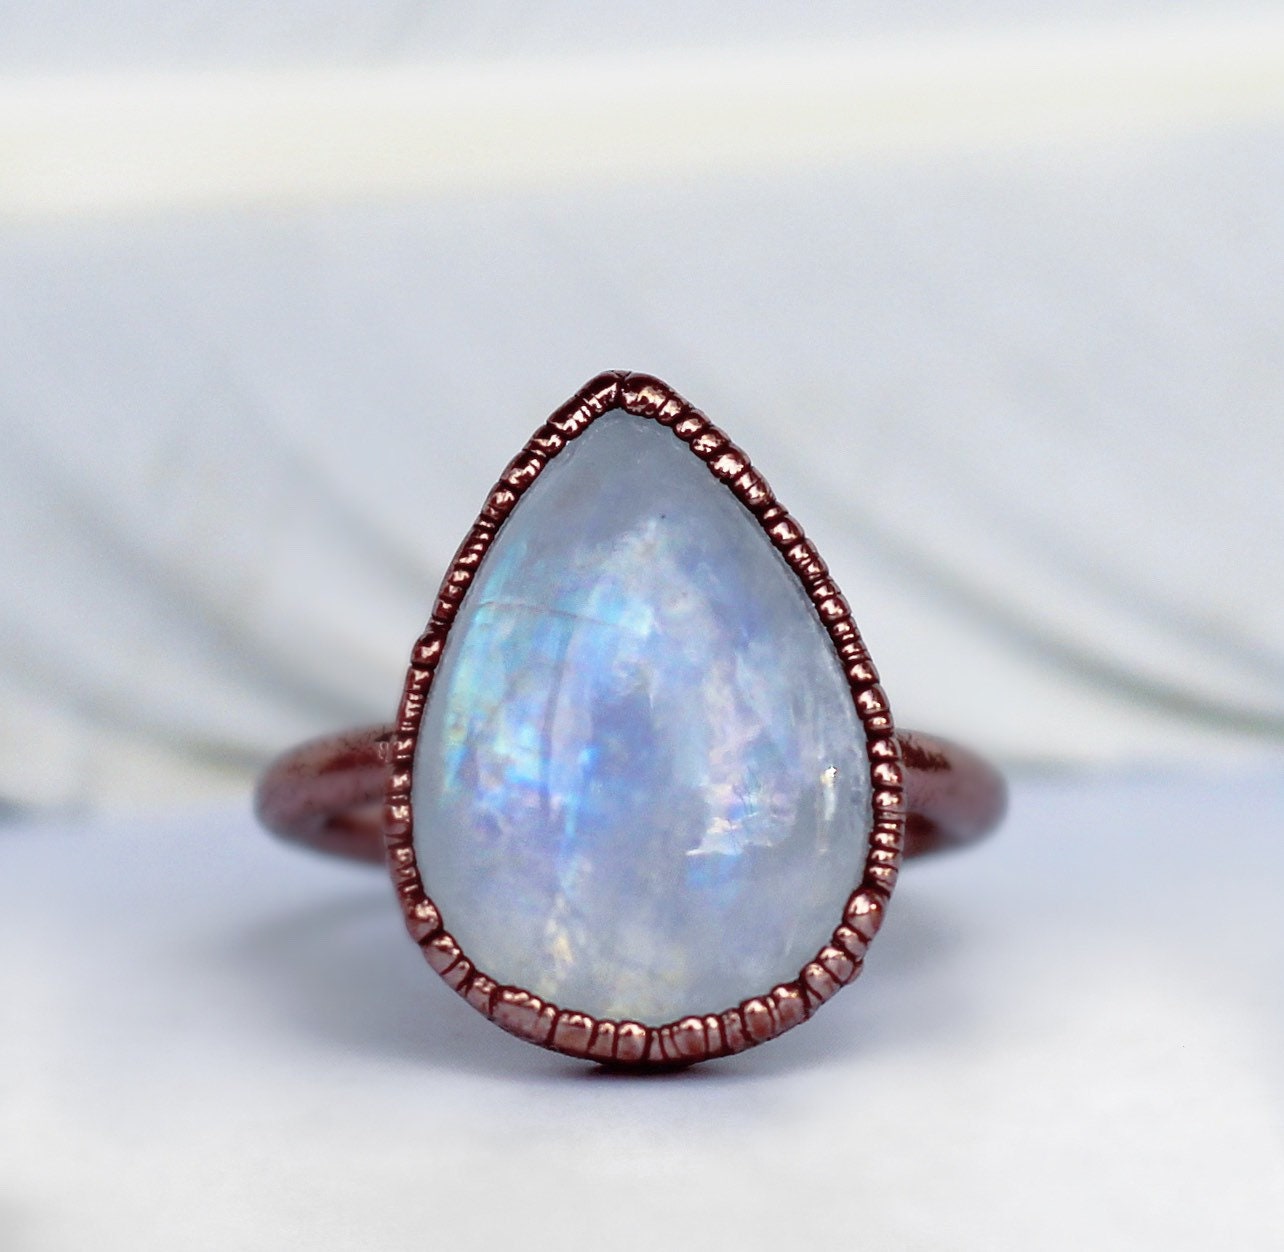 Moonstone Teardrop Ring, Rainbow Moonstone Crystal Ring, Teardrop Shaped Cocktail Ring, Moonstone Statement Ring